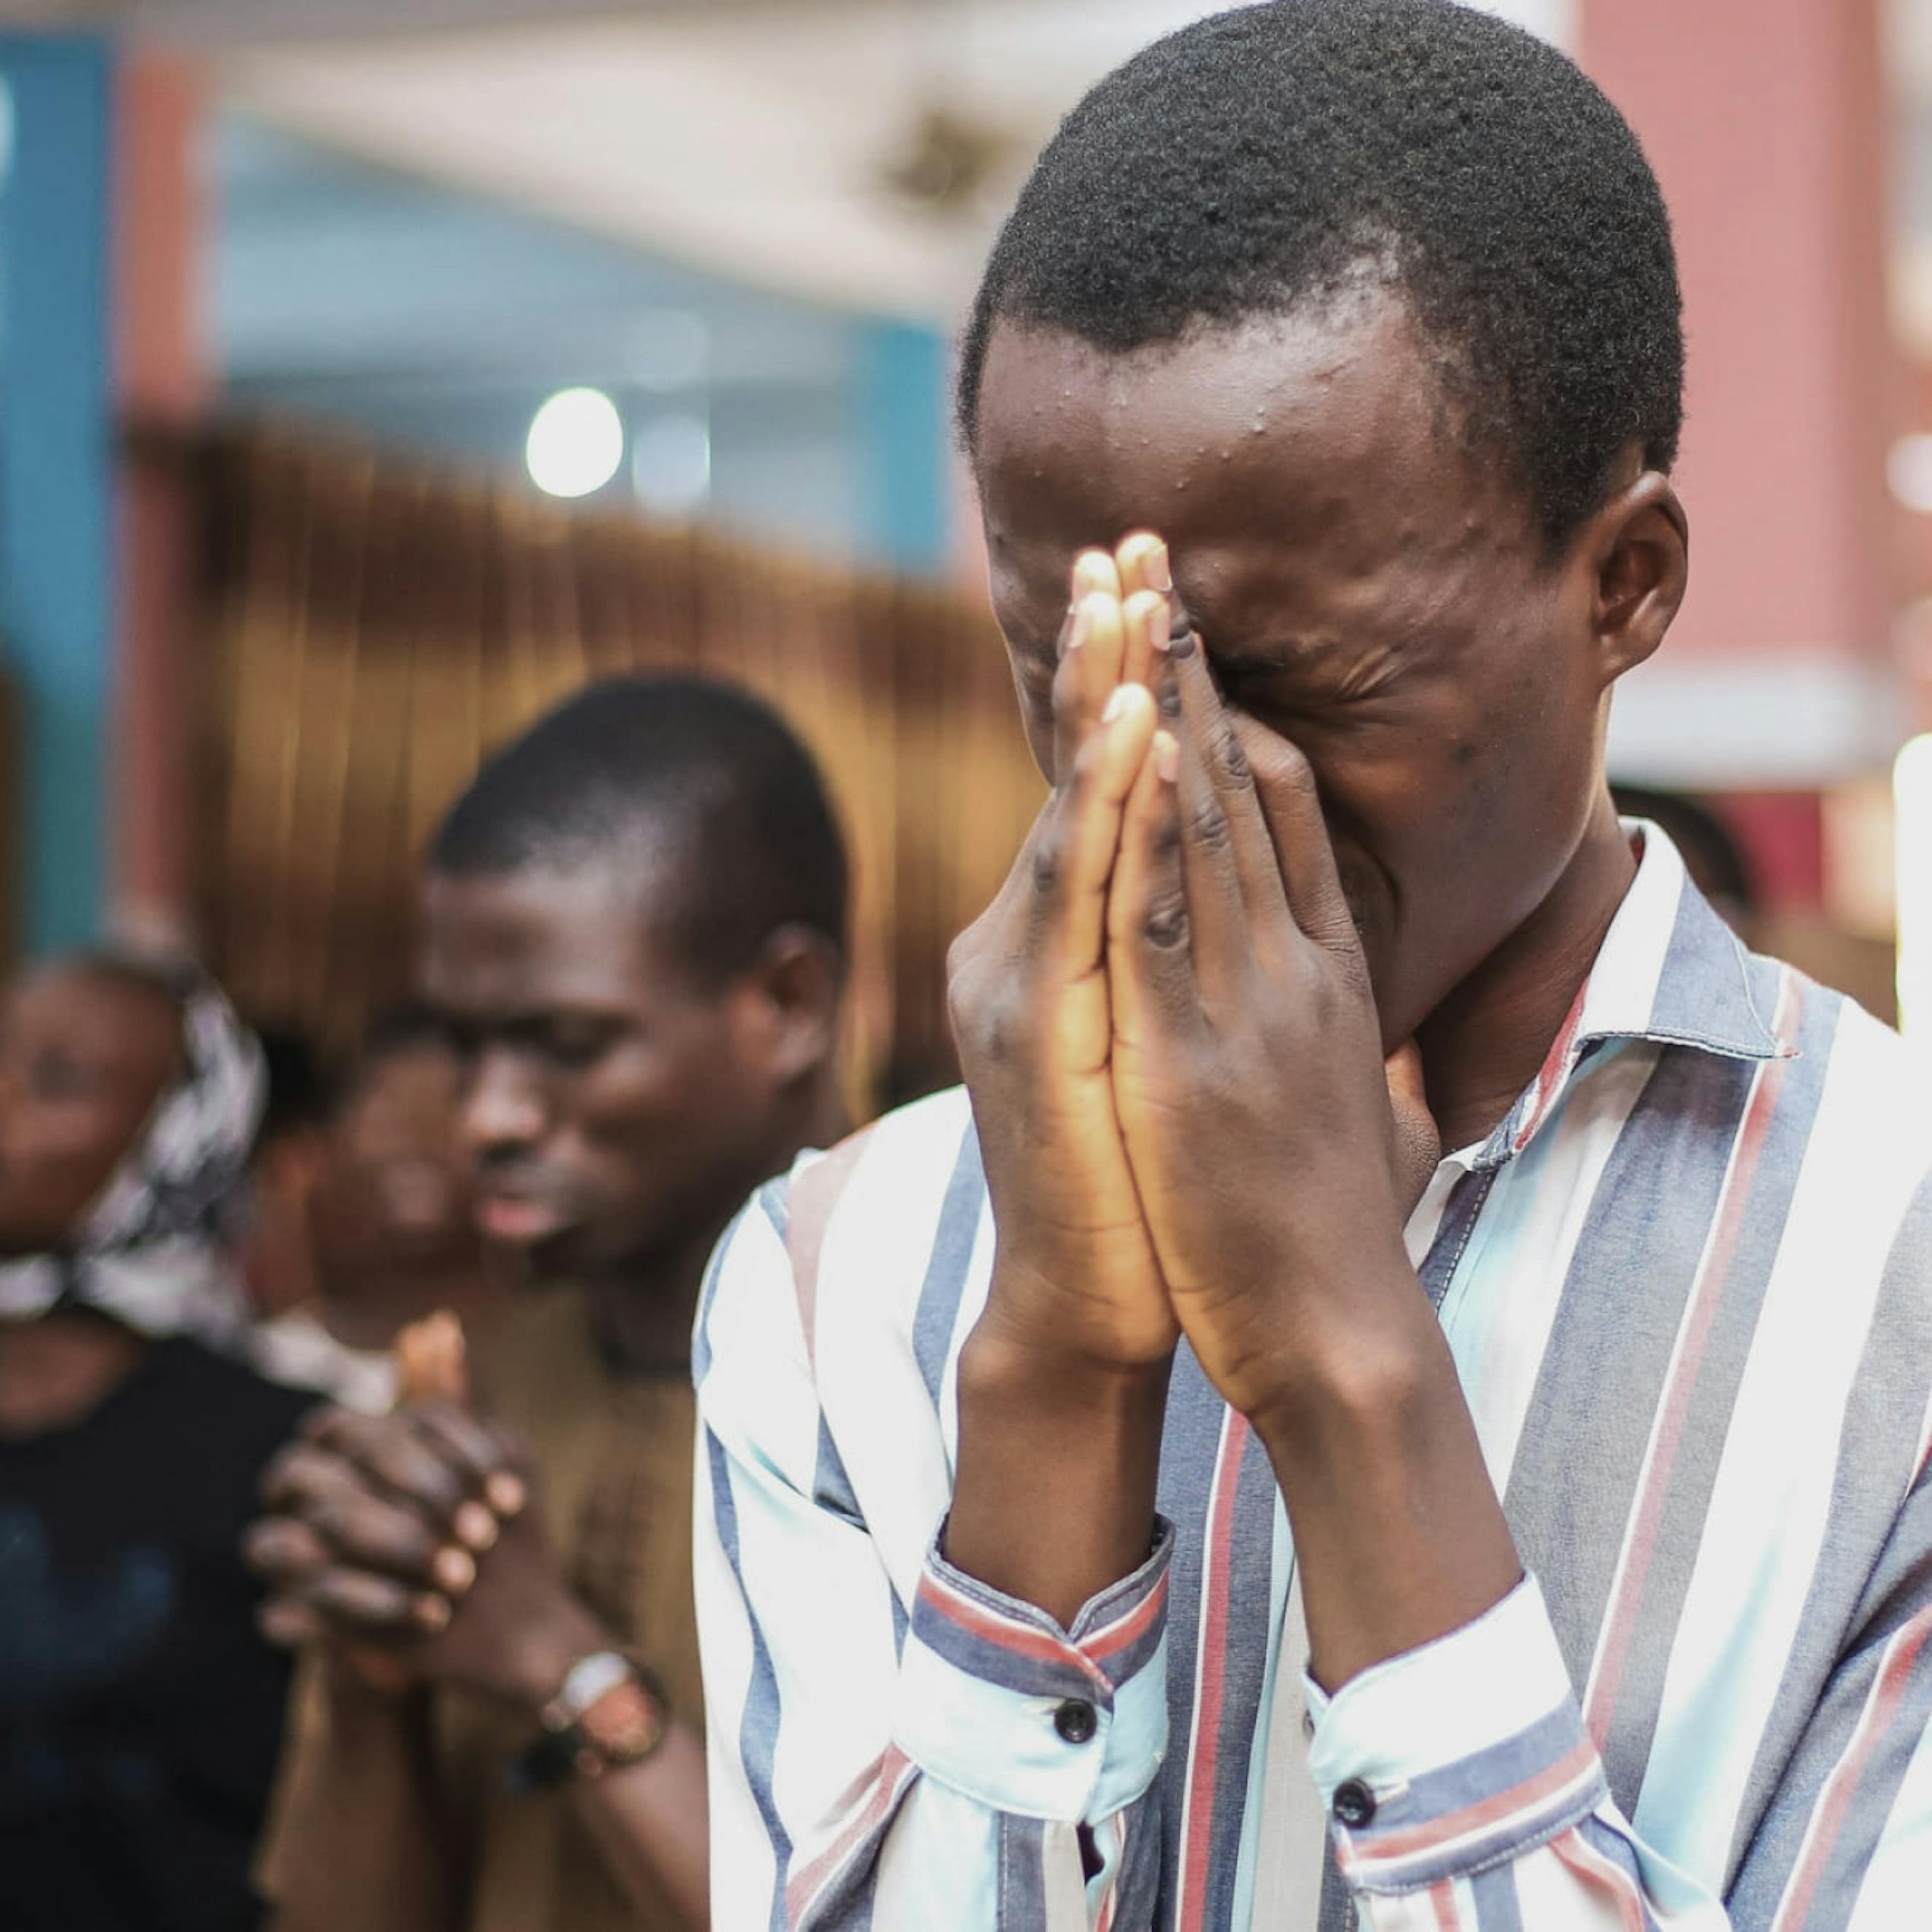 Nigerian men praying fervently at church.